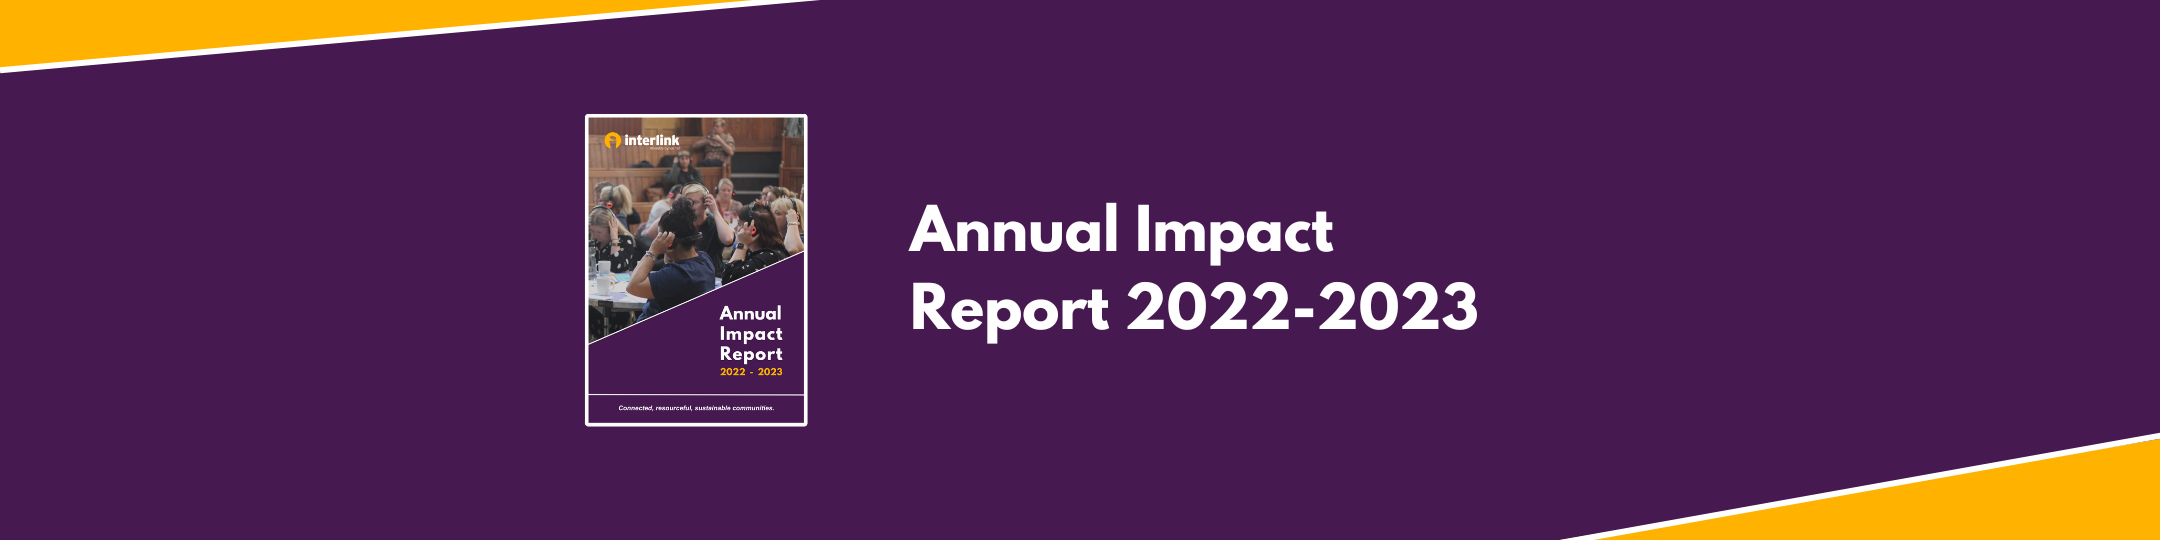 Annual Impact Report 2022-2023